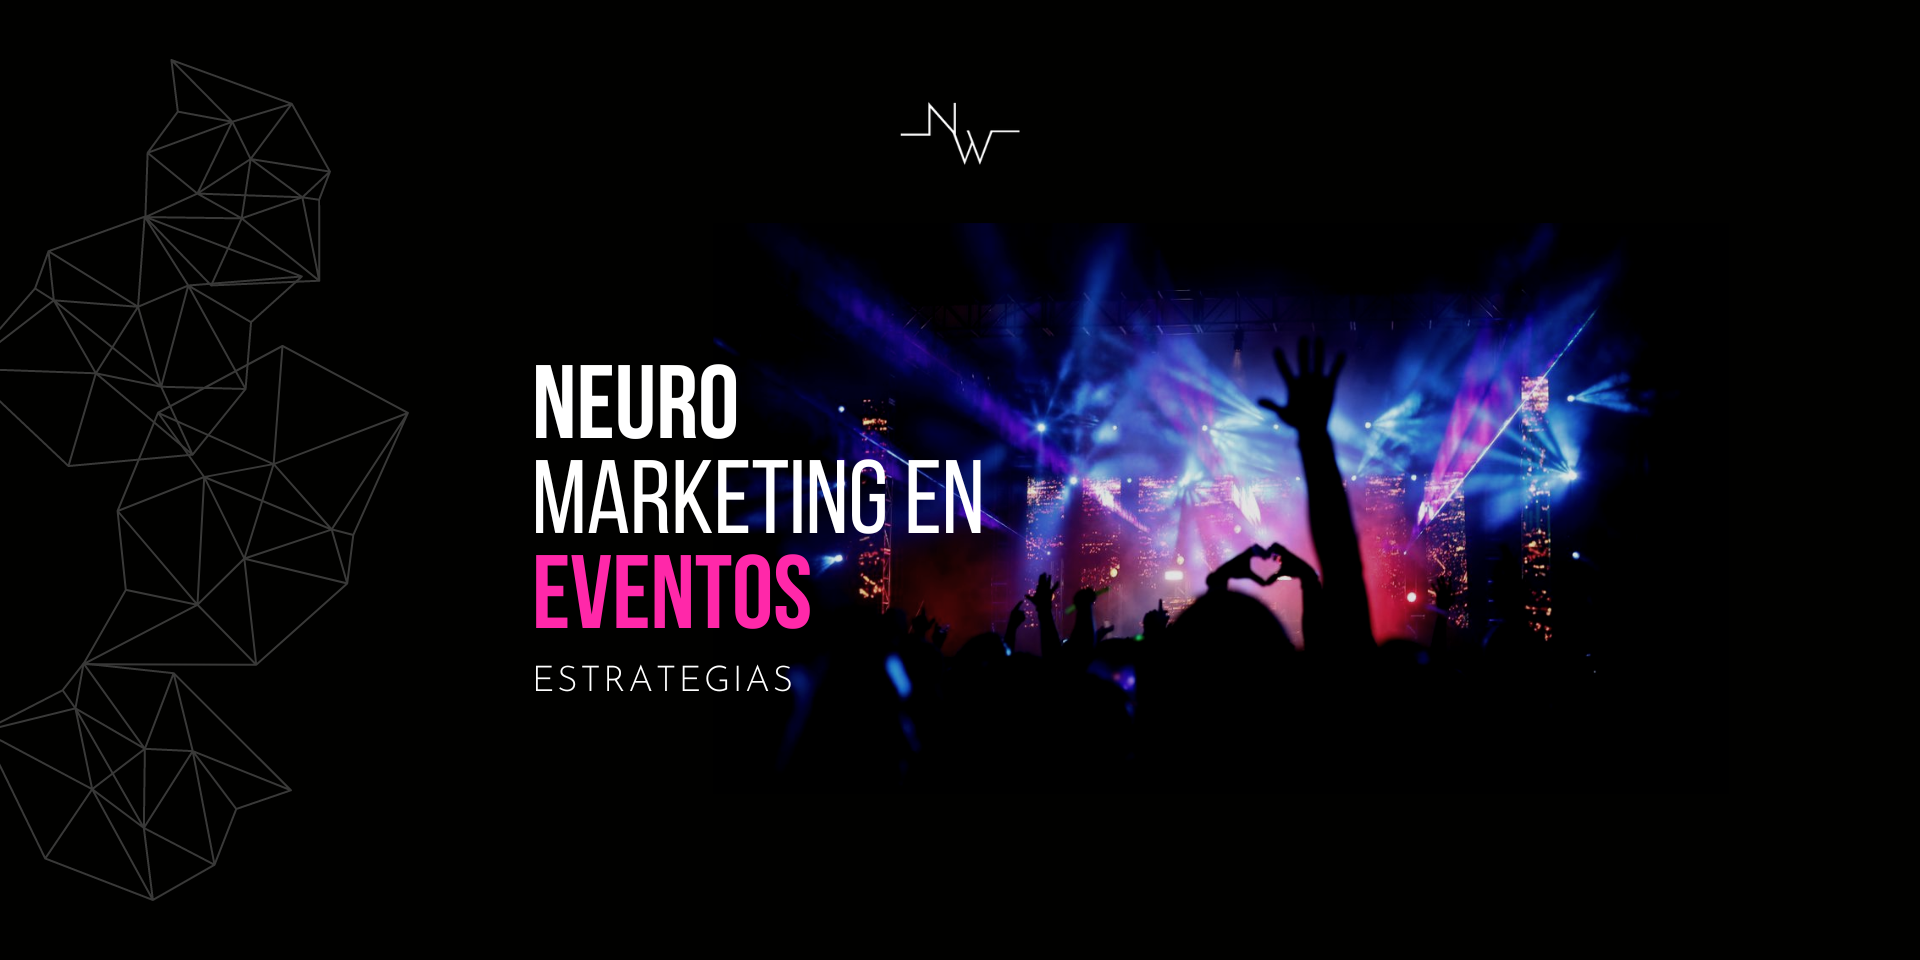 Neuromarketing en eventos Niwsion blog